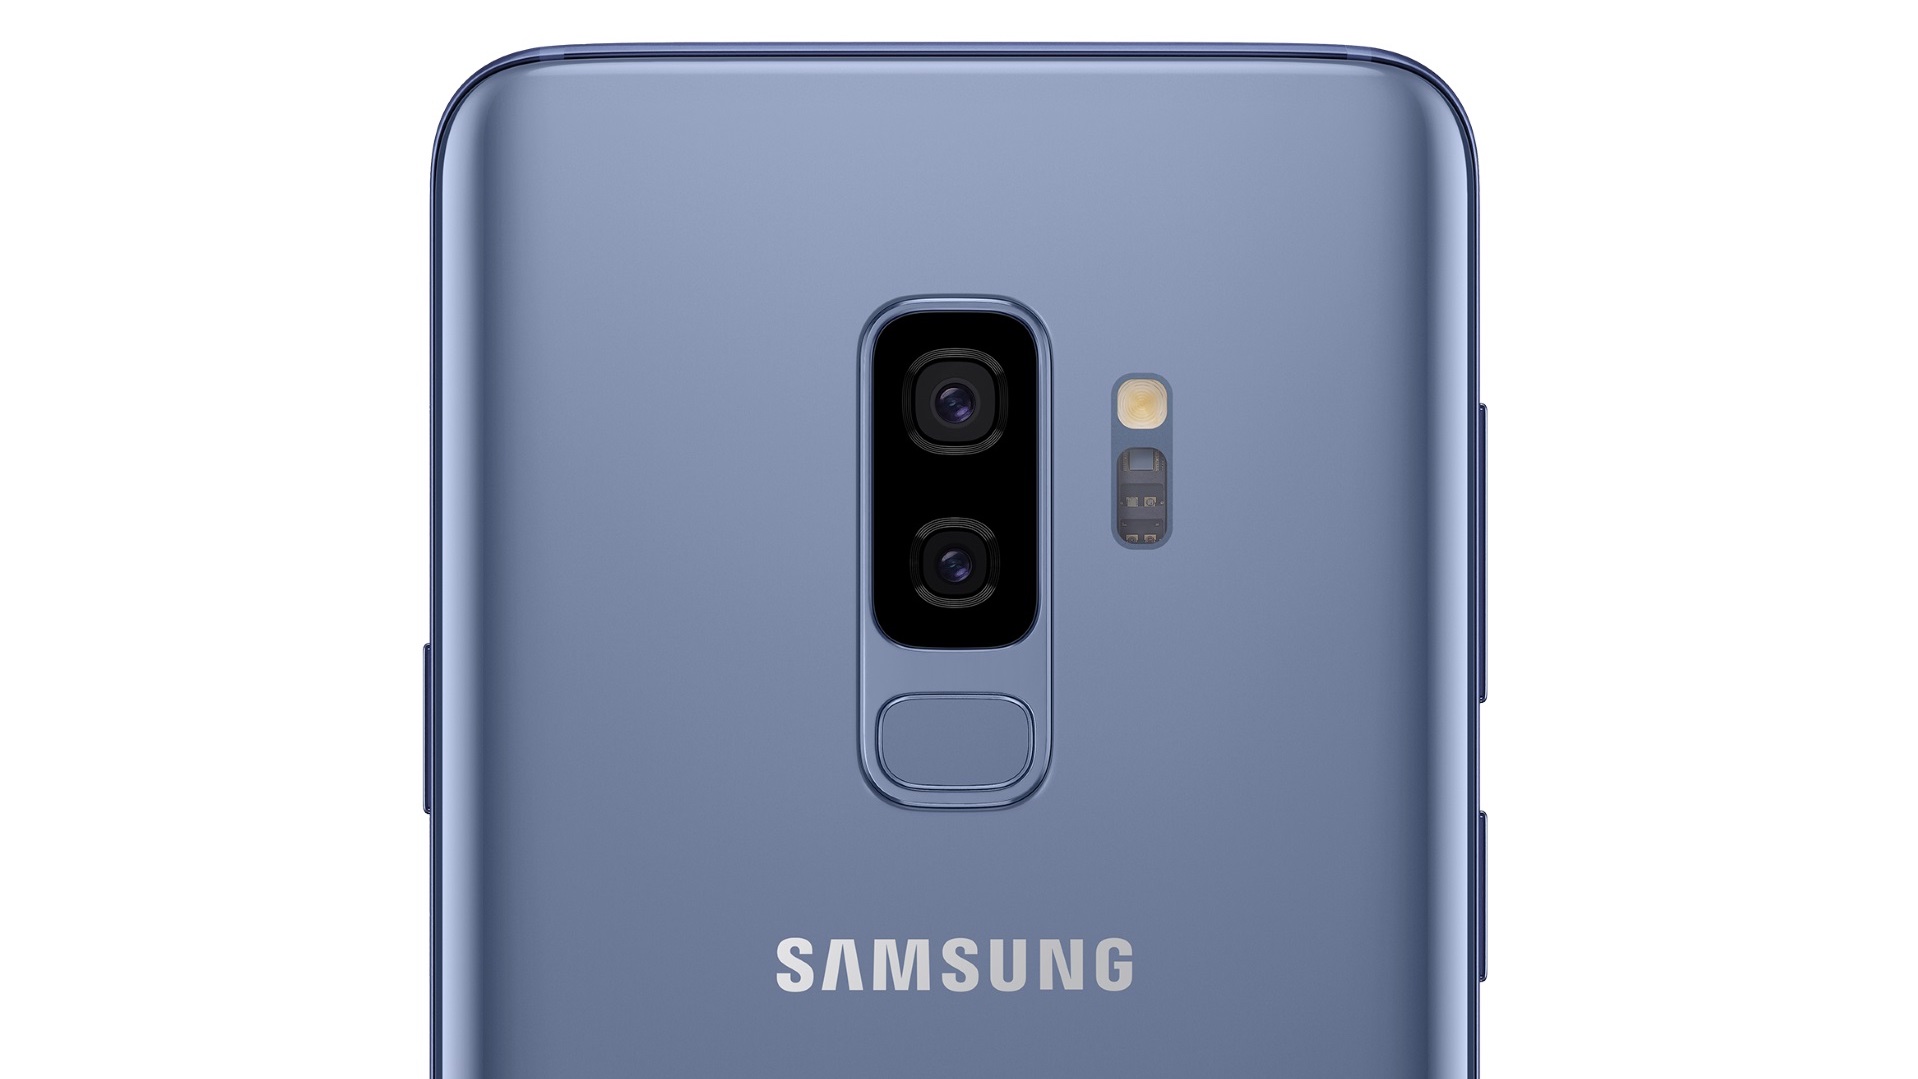 The Samsung Galaxy S9